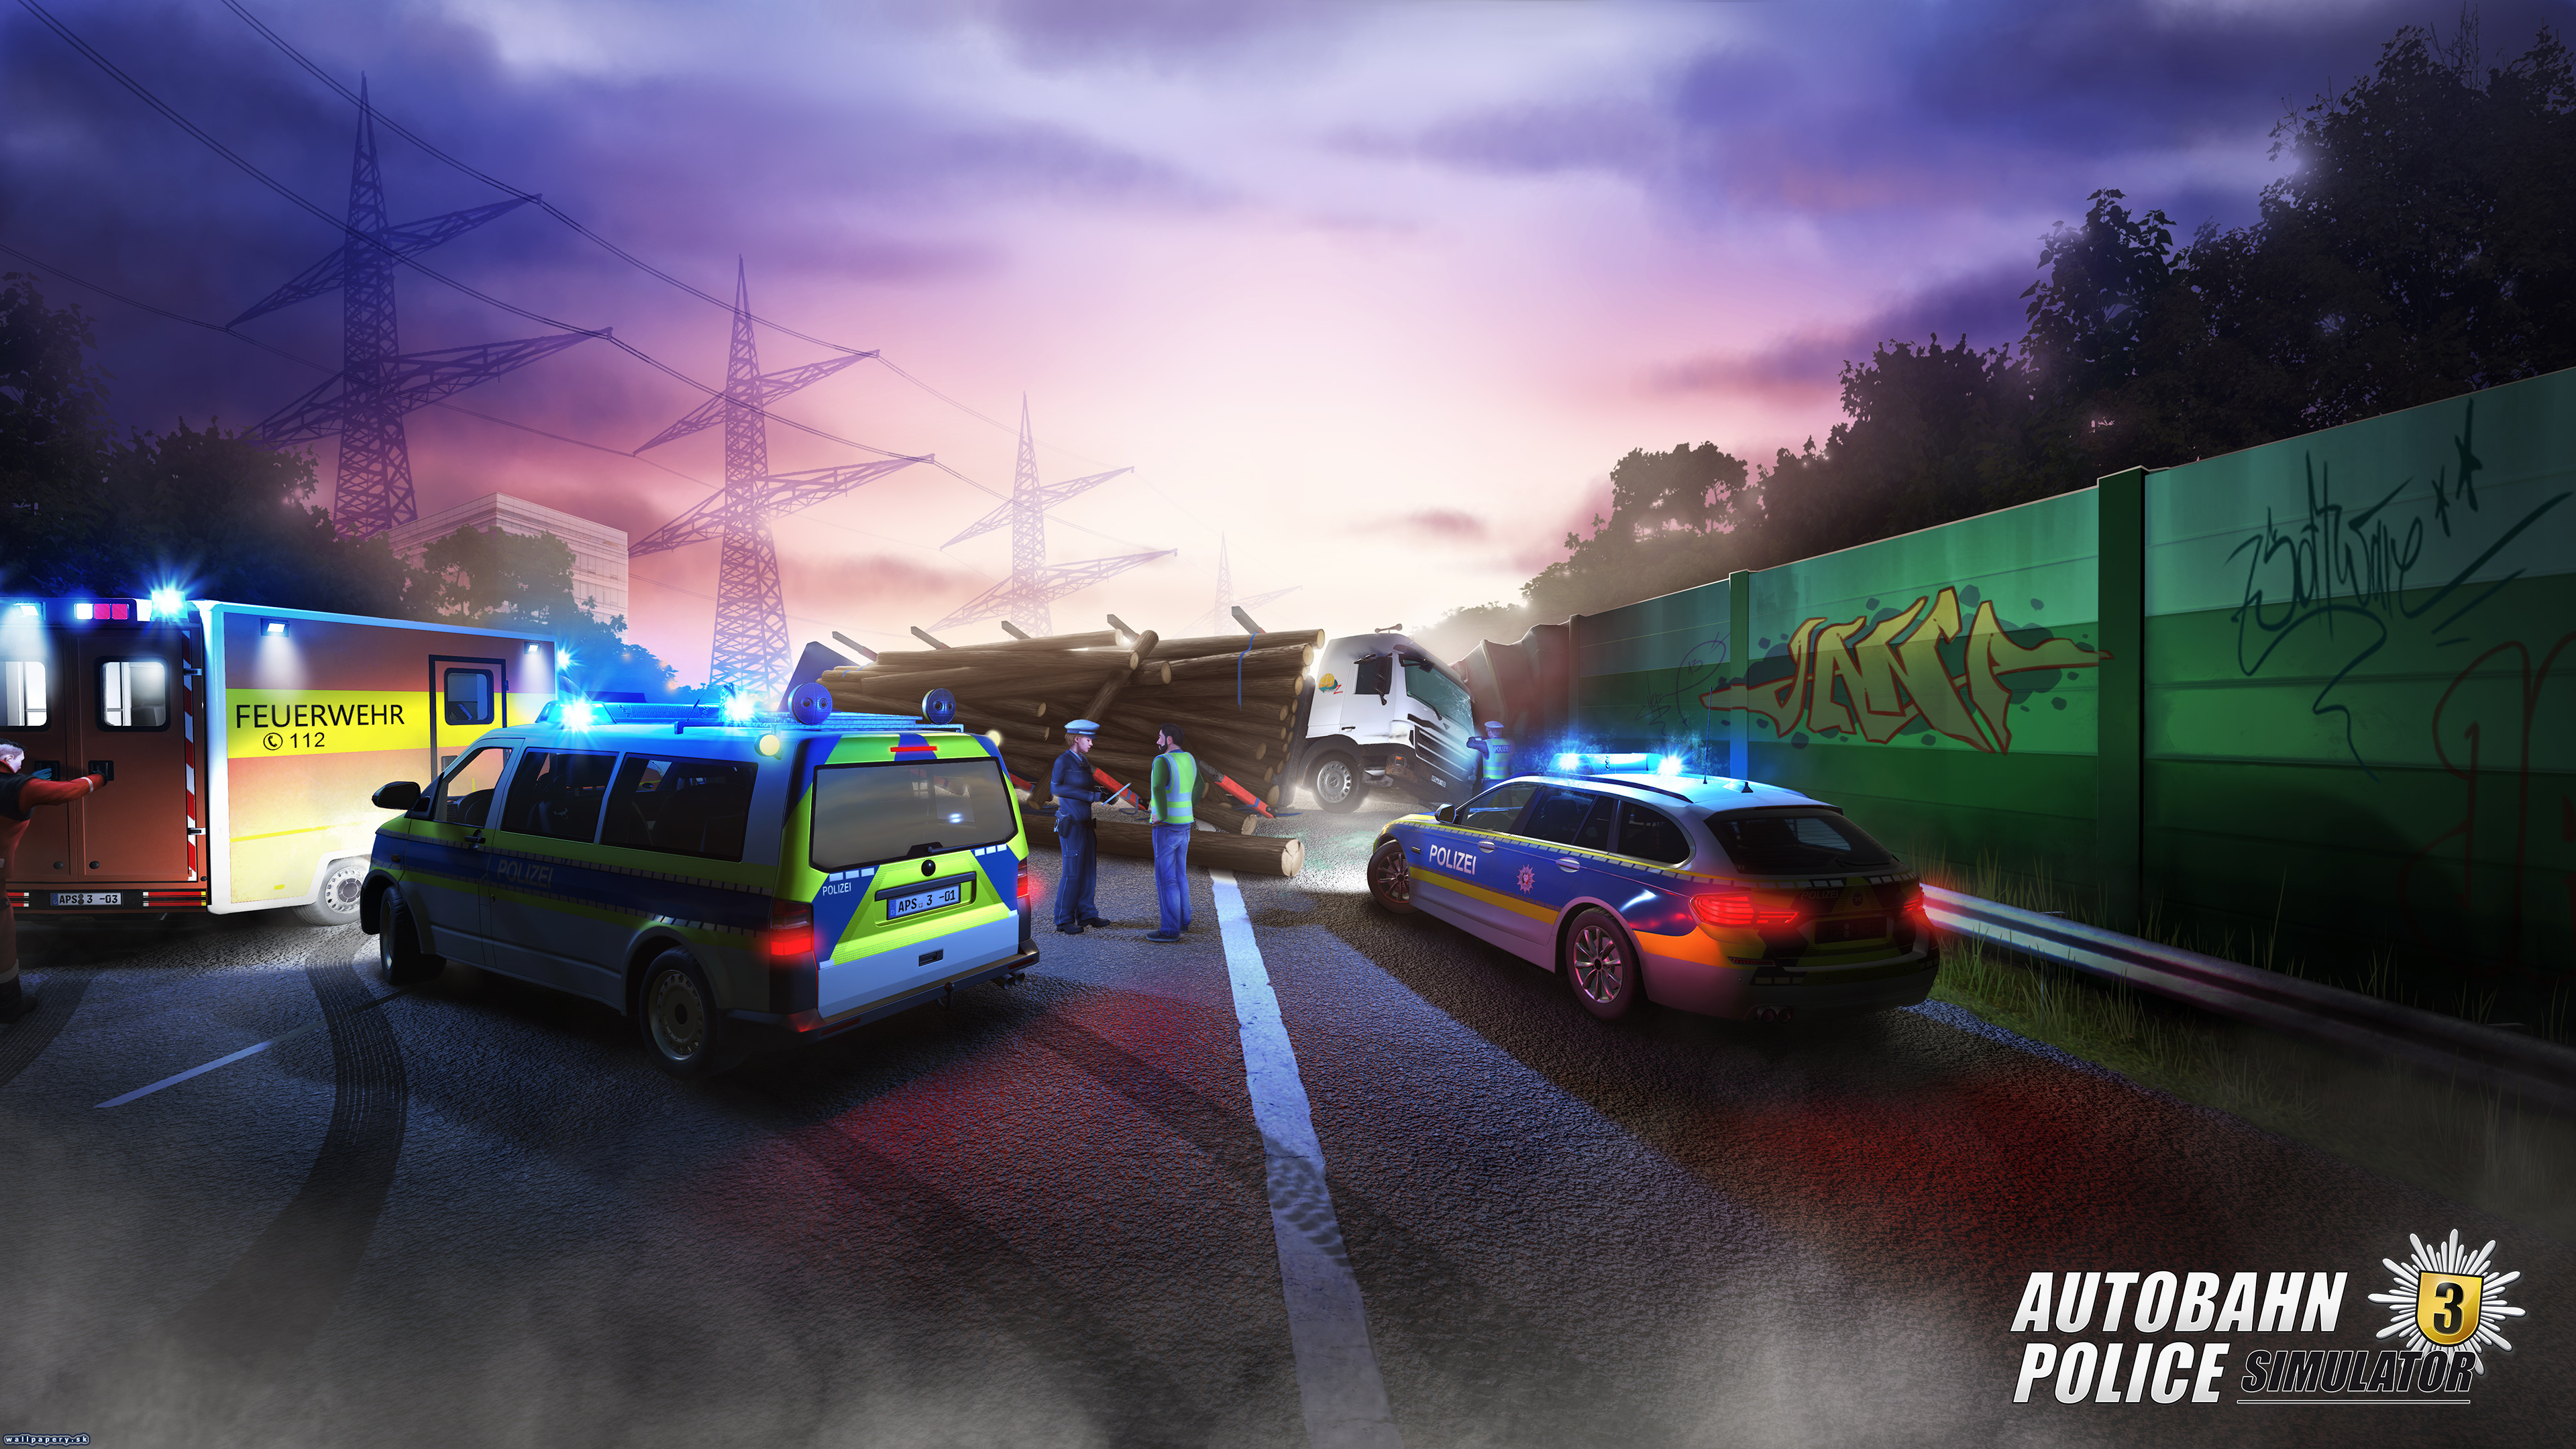 Autobahn Police Simulator 3 - wallpaper 2